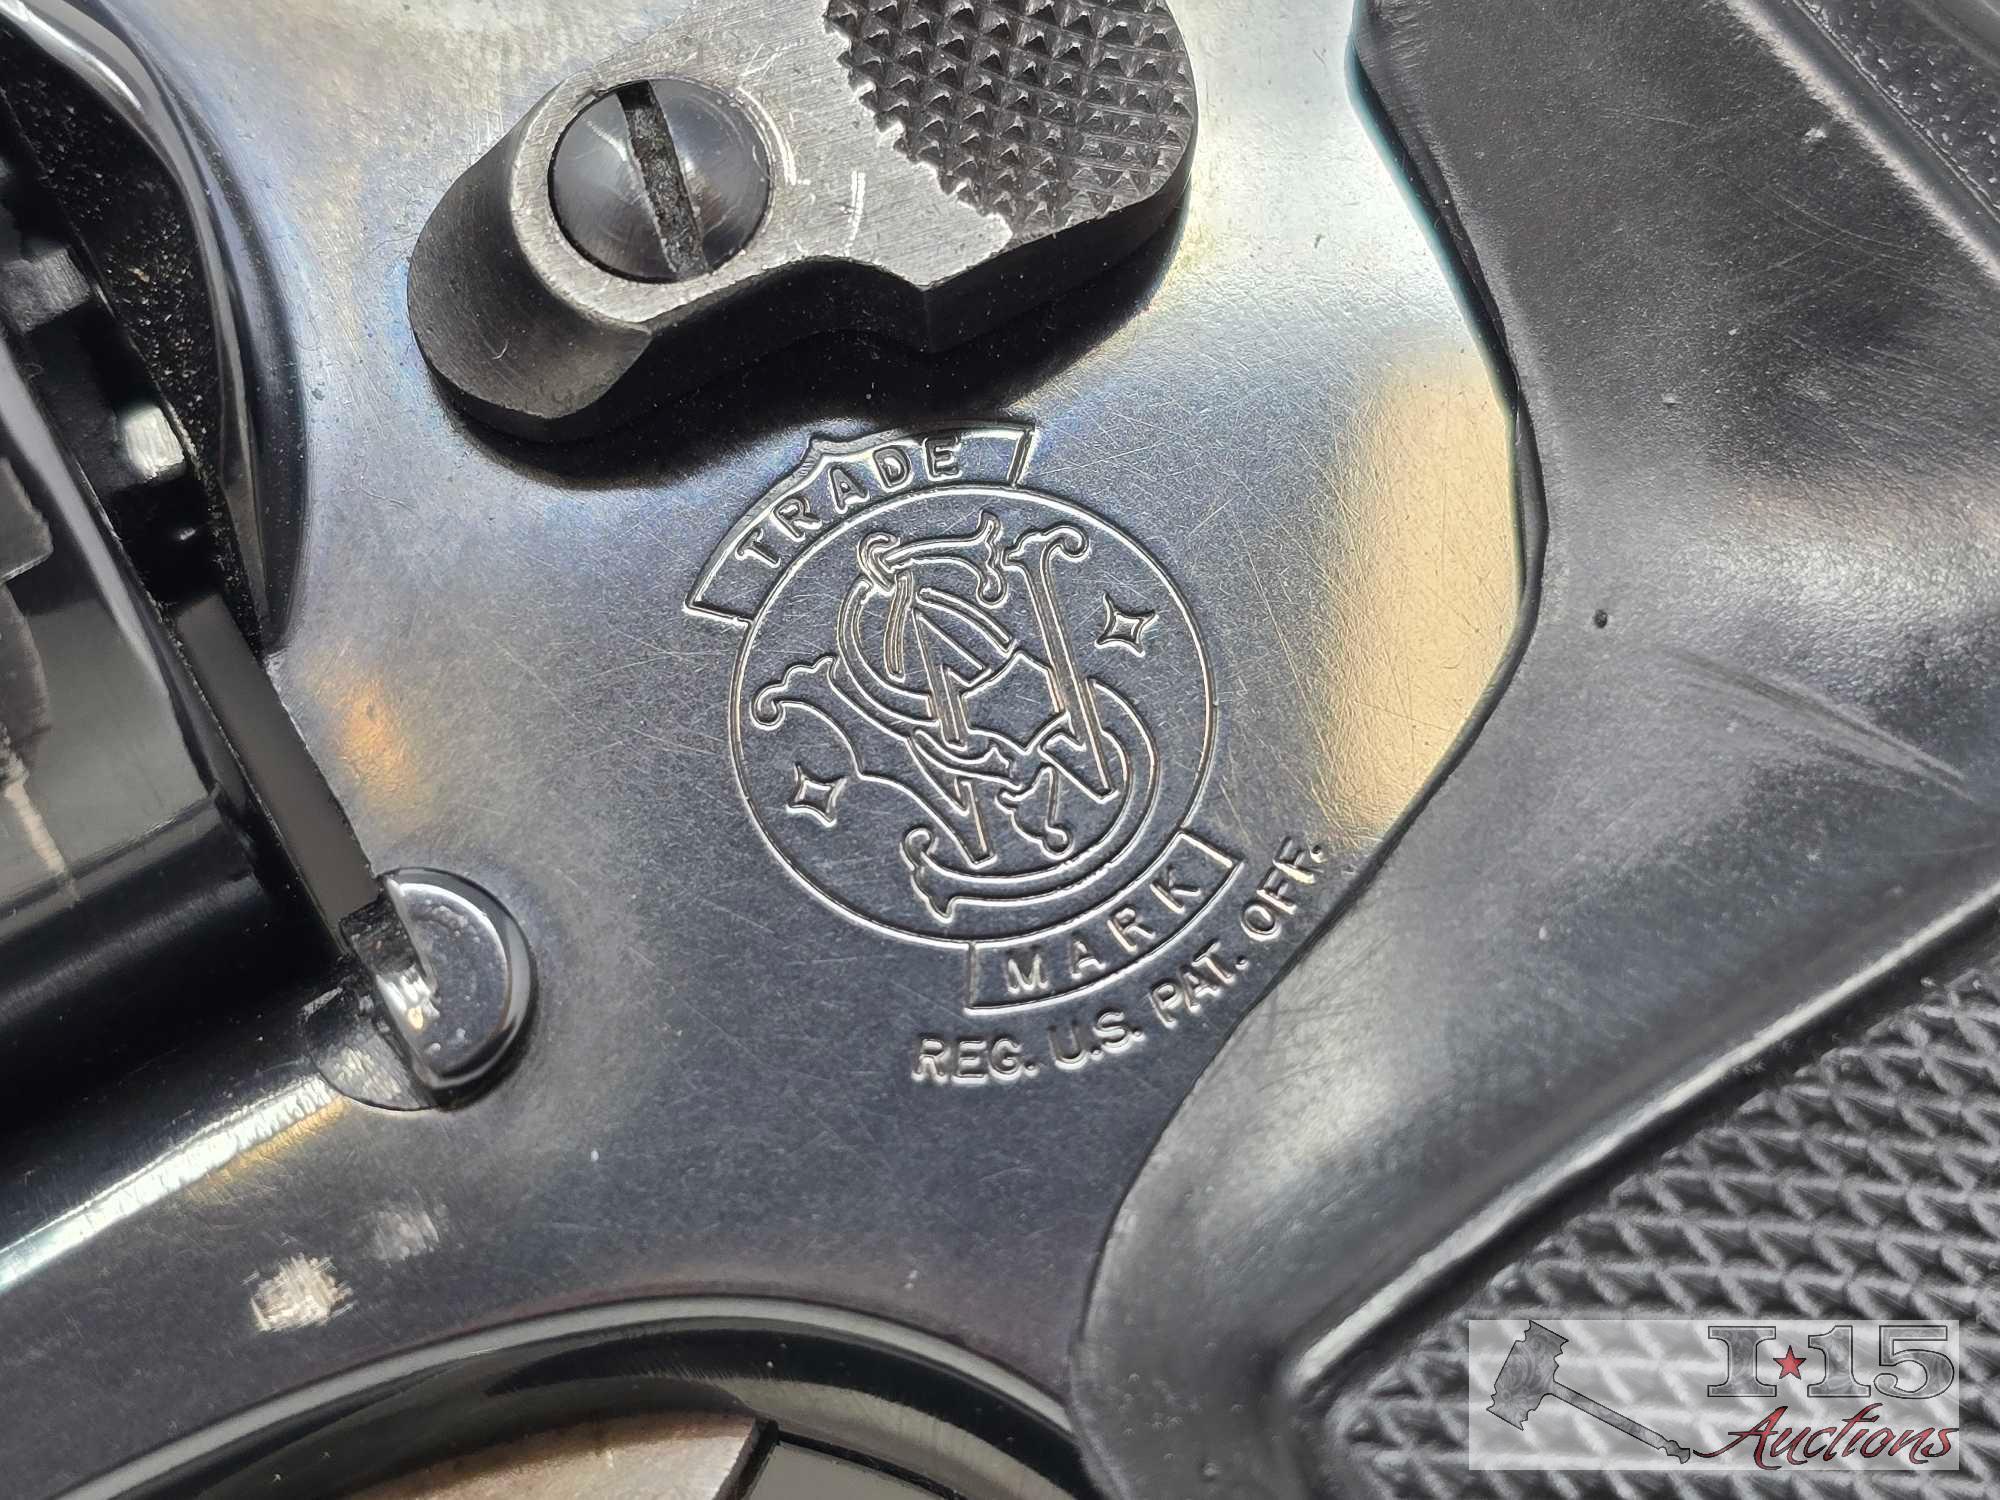 Smith & Wesson 586-1 .357 Magnum Revolver